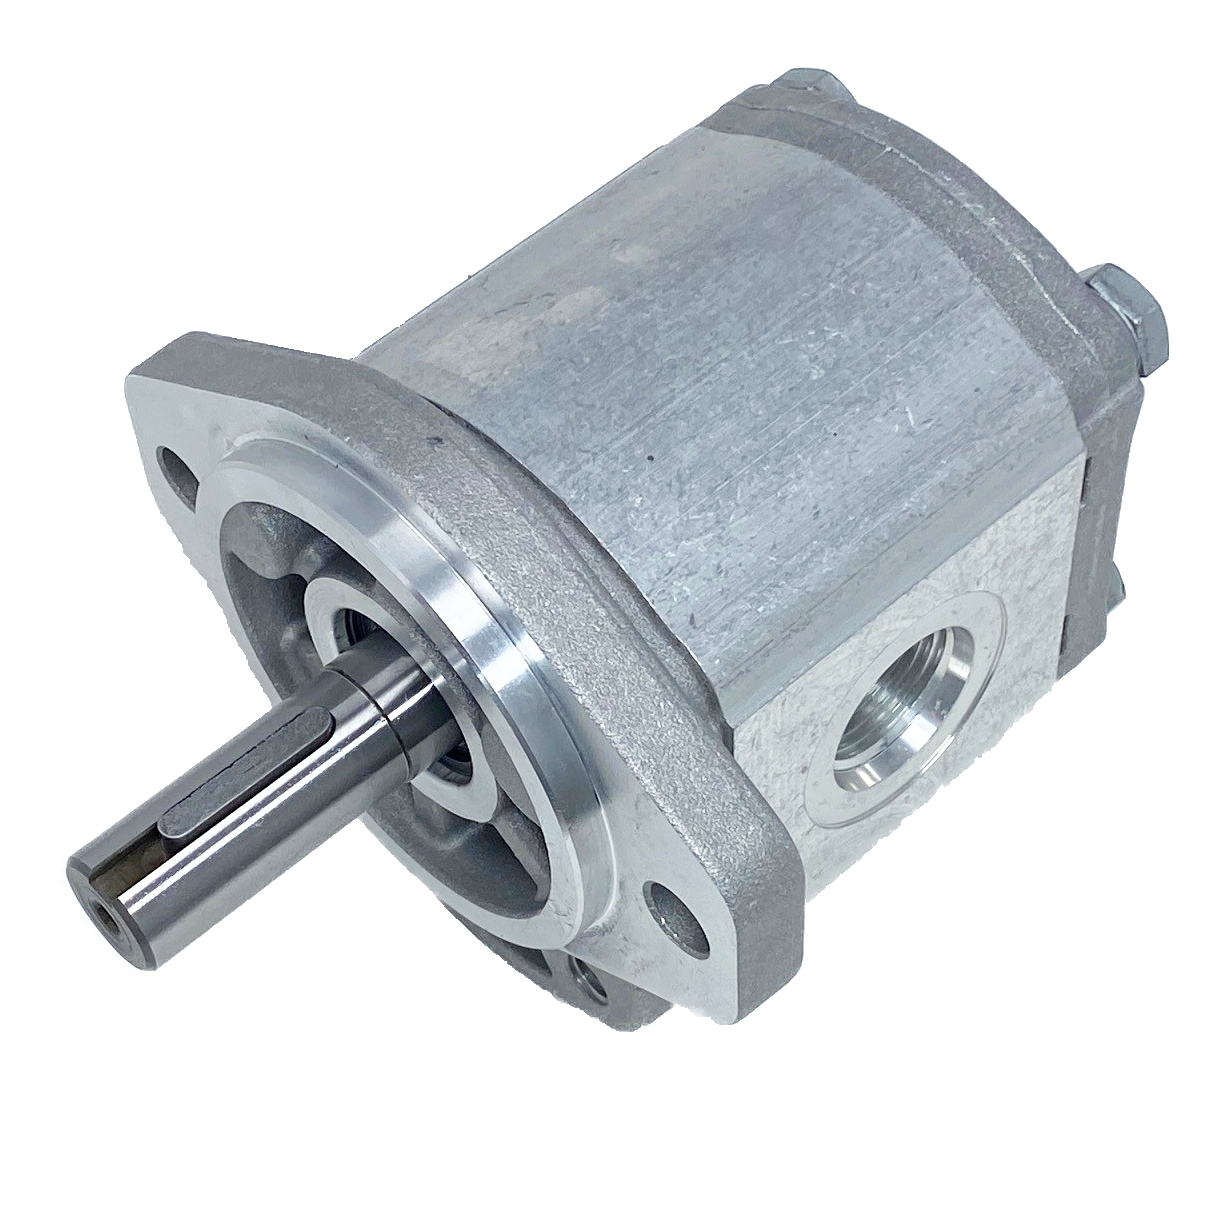 PLM20.16B0-49S1-LOC/OD-N-EL : Casappa Polaris Gear Motor, 16.85cc, 3625psi Rated, 3000RPM, Reversible Interior Drain, 3/4" Bore x 3/16" Key Shaft, SAE A 2-Bolt Flange, 0.625 (5/8") #10 SAE Inlet, 0.75 (3/4") #12 SAE Outlet, Aluminum Body & Flange